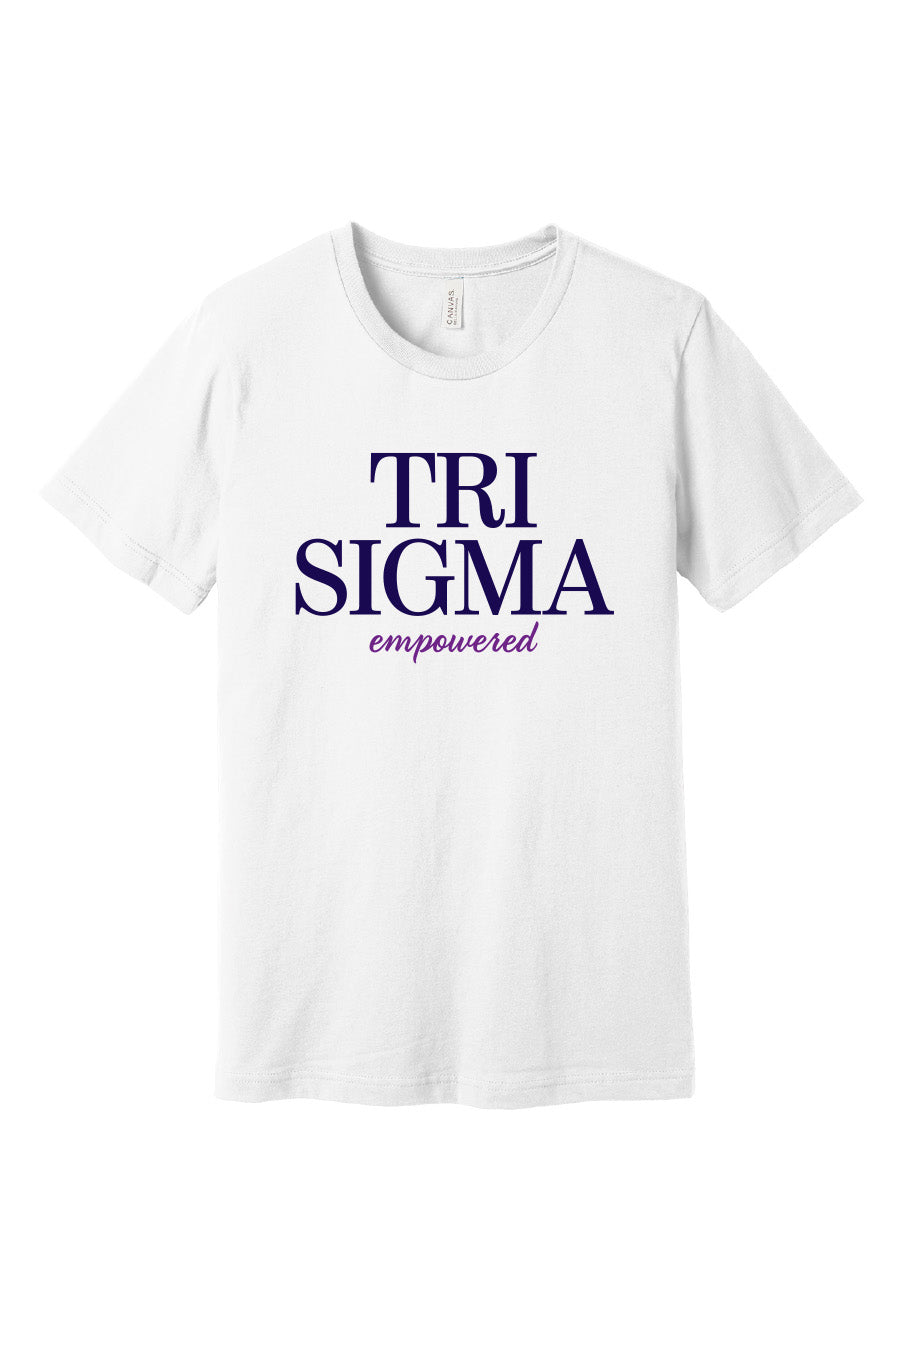 Tri Sigma Empowered Tee